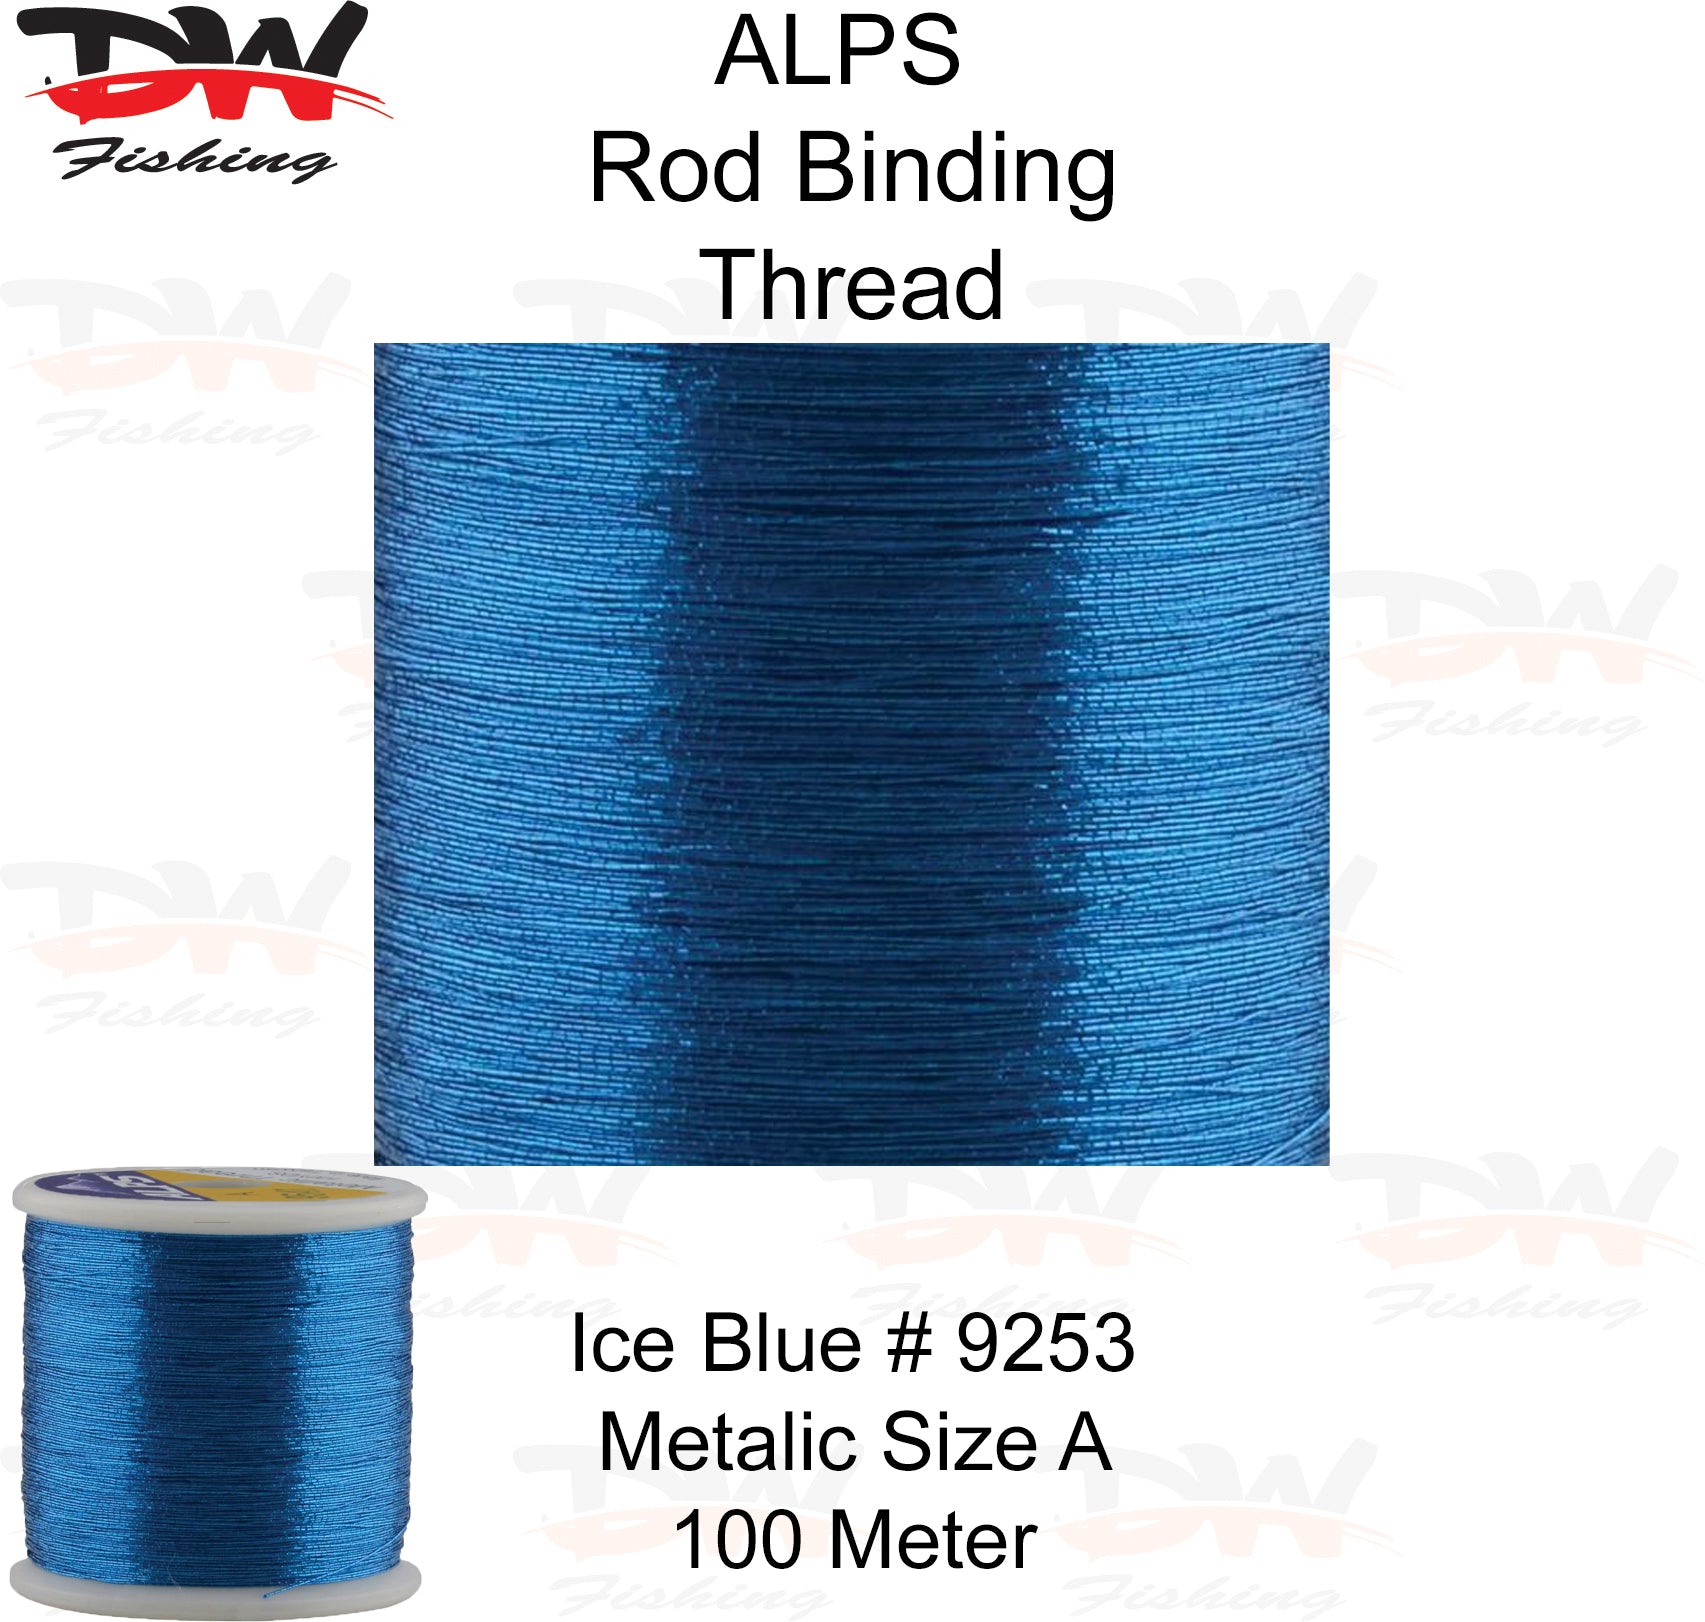 ALPS metalic rod binding thread ice blue